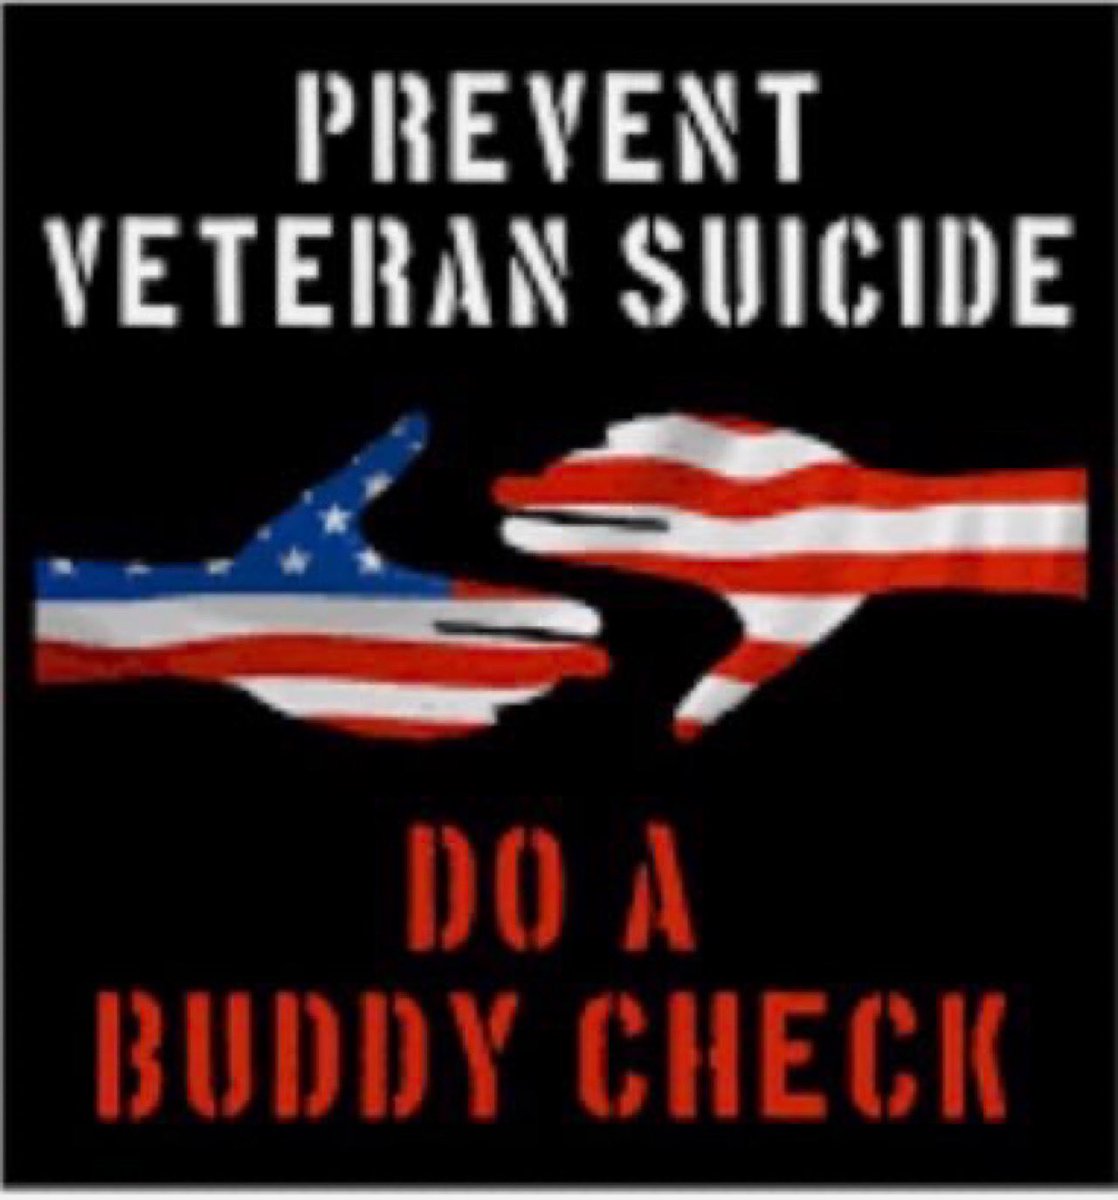 Sat #BuddyChecksMatter Veterans 🇺🇸
#Turn22To0 to #EndVeteranSuicide 💞
#PTSDAwarenessMonth 🛩🛩🛩🛩🛩
➡️@royharper53🛩🇺🇸
➡️@Wolfeagle17🛩🇺🇸
➡️@RepentYesh26034🛩🇺🇸
➡️@MikeCorkSr1🛩🇺🇸
➡️@01Fender_Player🛩🇺🇸
➡️@SgtRPaj🛩🇺🇸